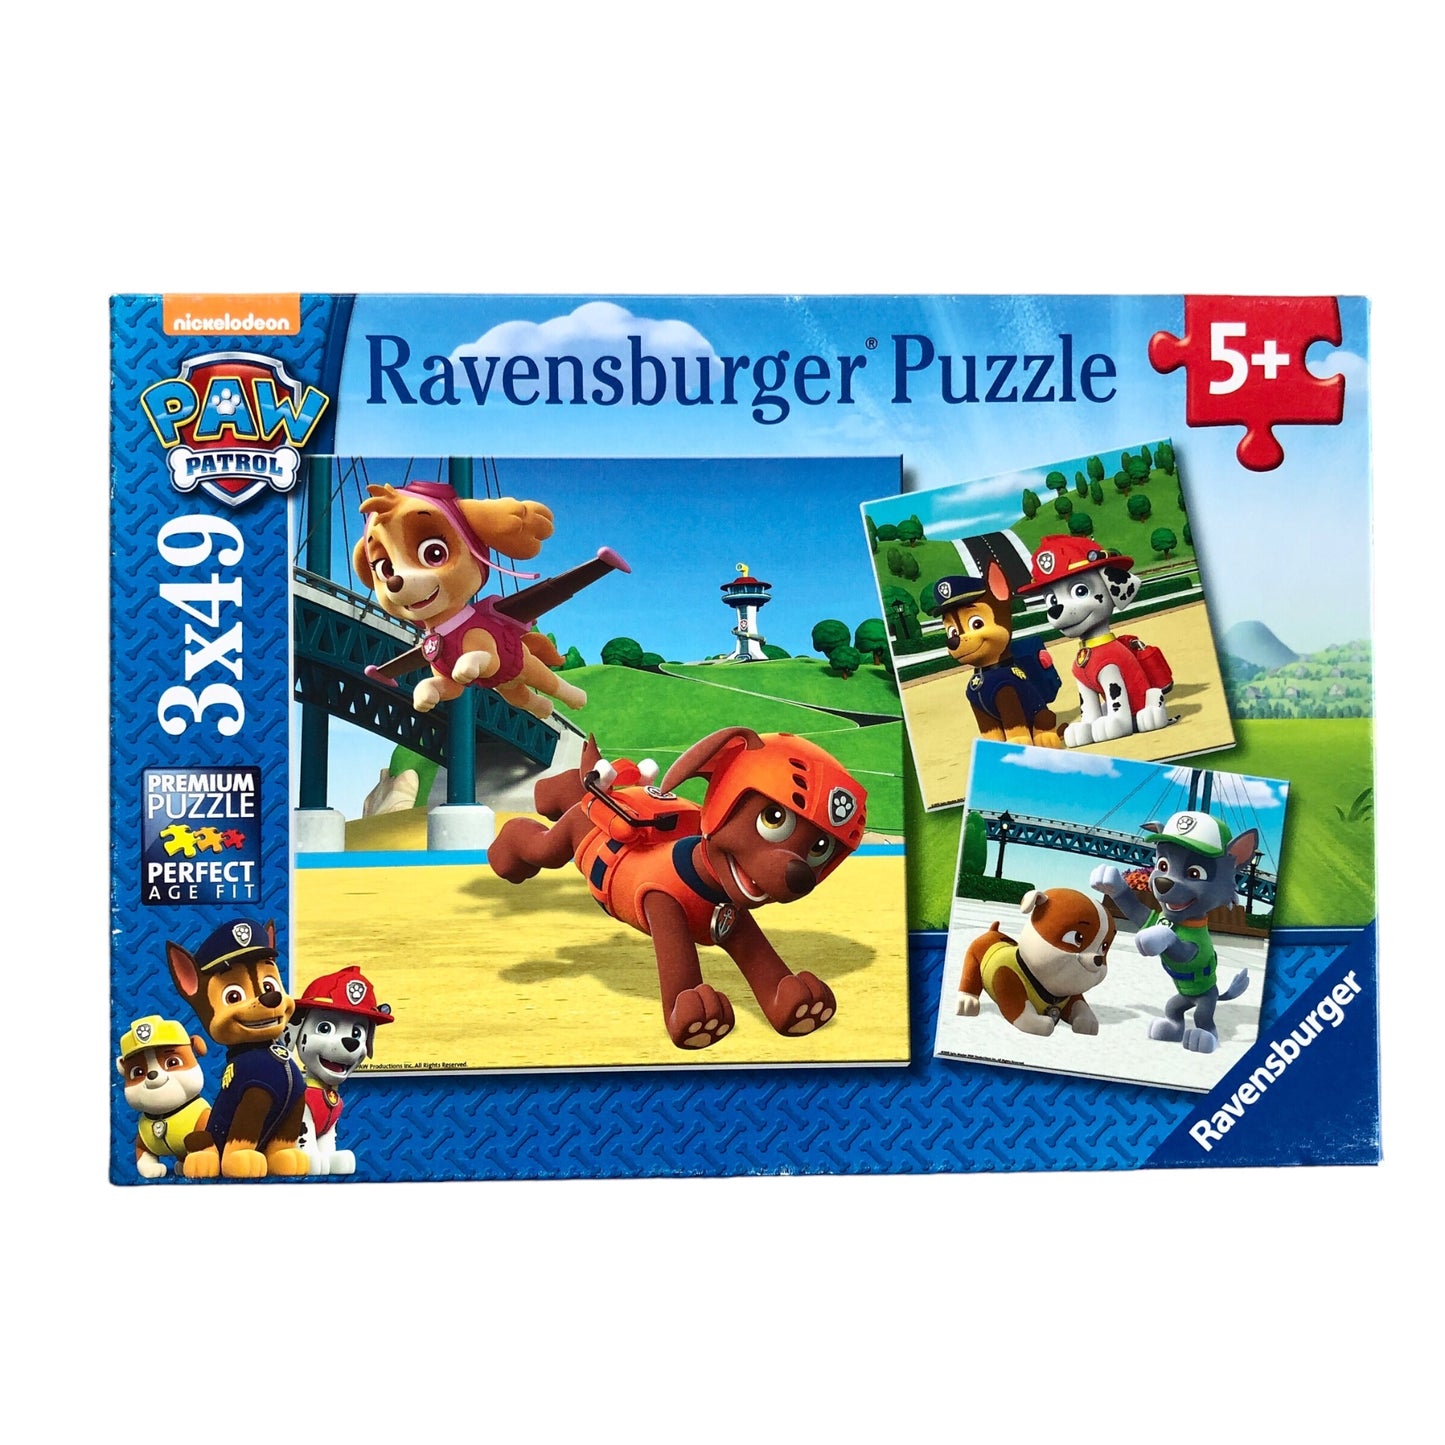 Ravensburger - Puzzle Paw Patrol, Team on 4 Paws